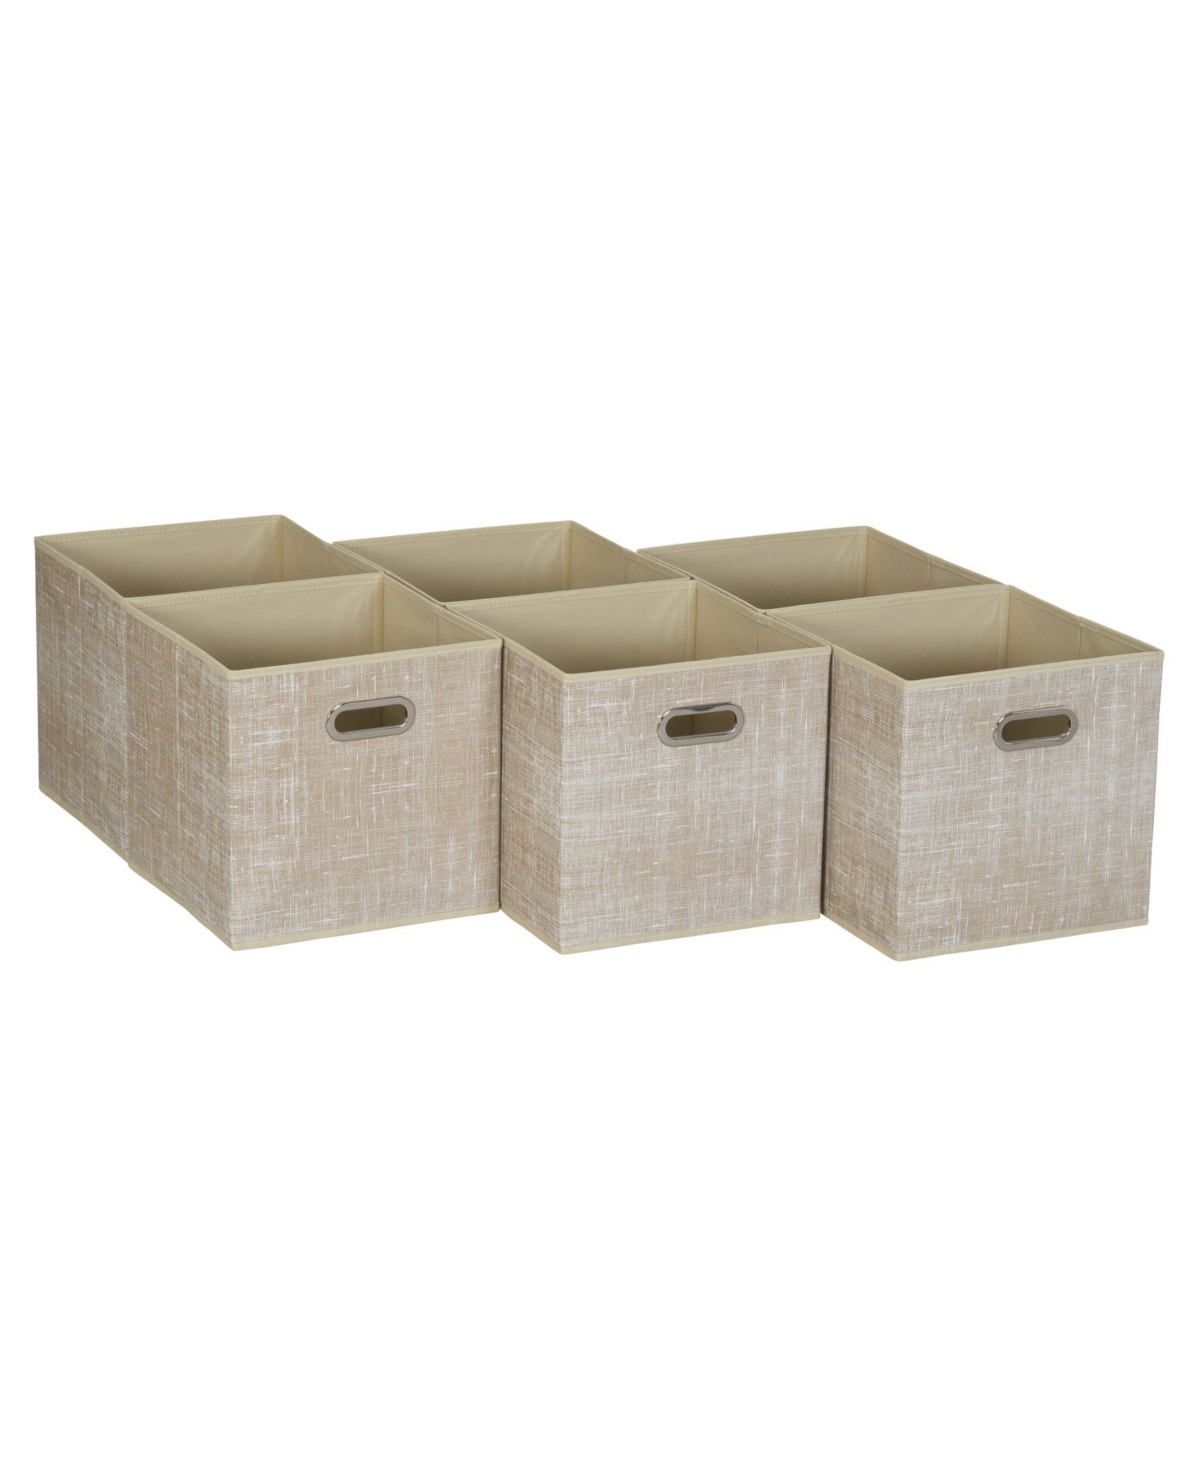 Household Essentials Fabric Cube Storage Bins Set, 6 Piece In Tan